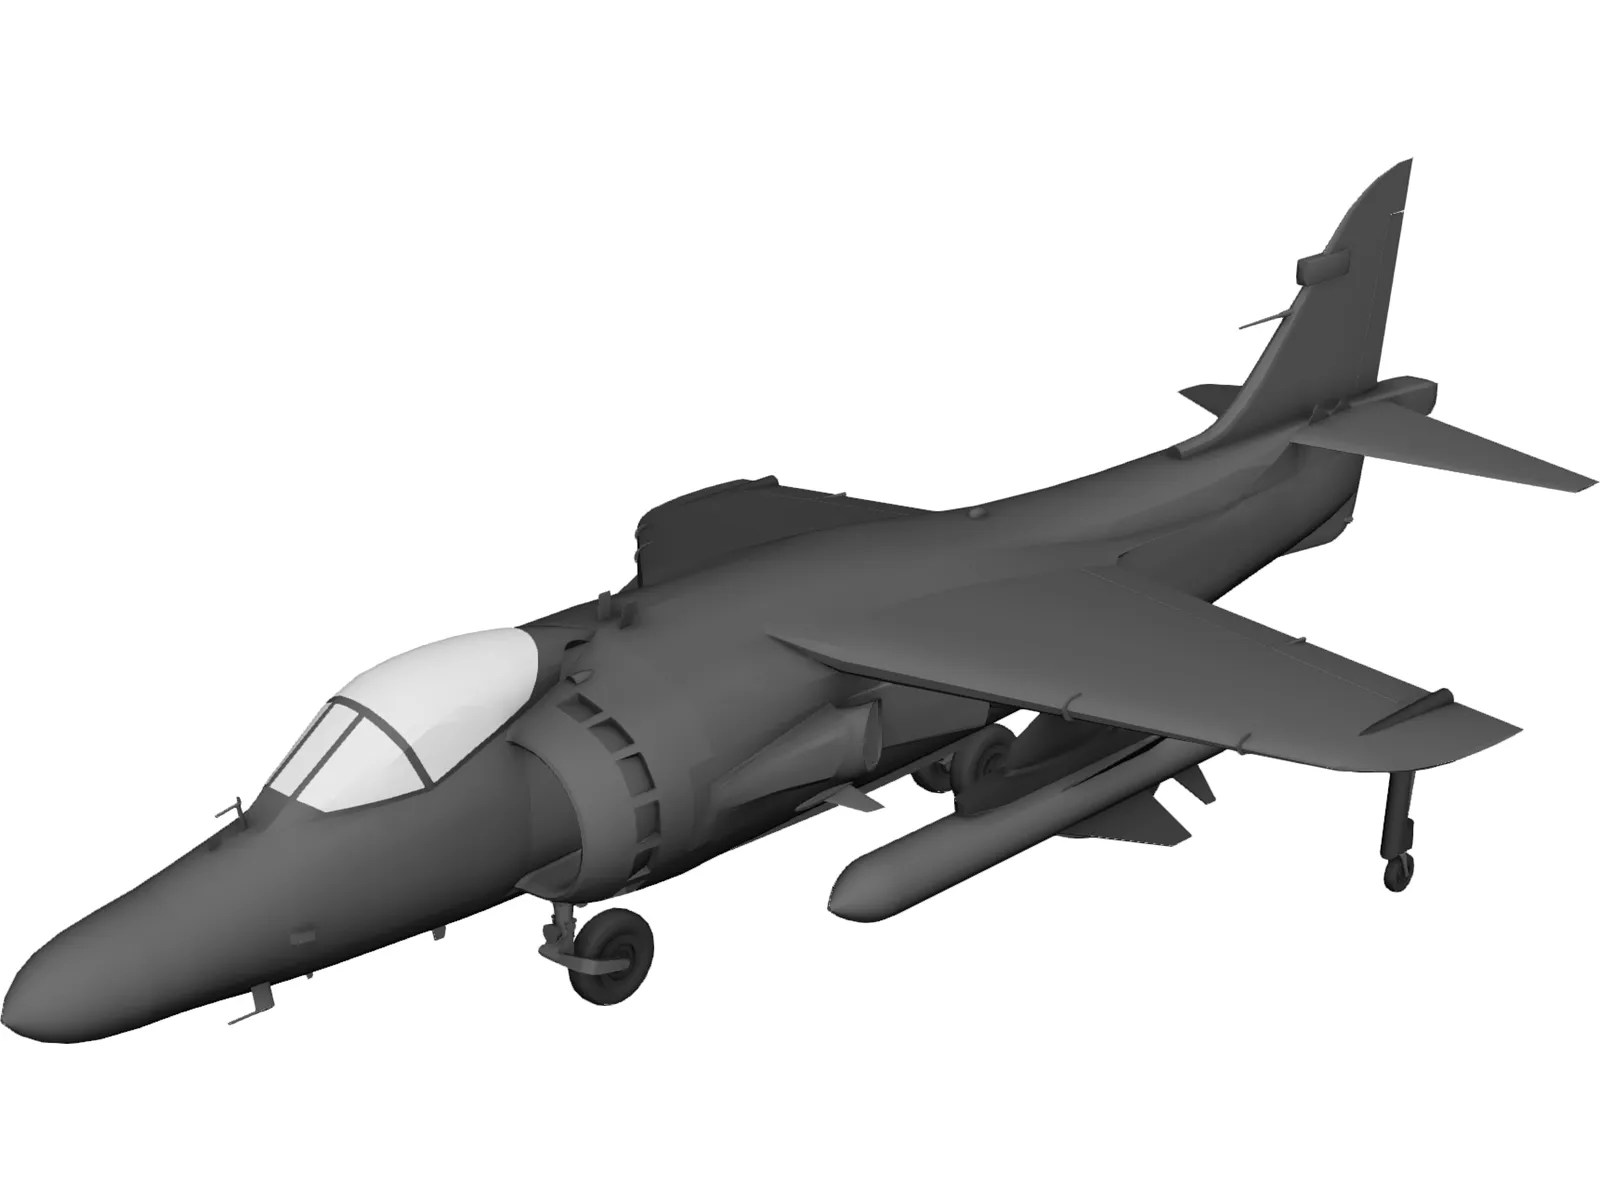 BAE Sea Harrier Mk.2 3D Model